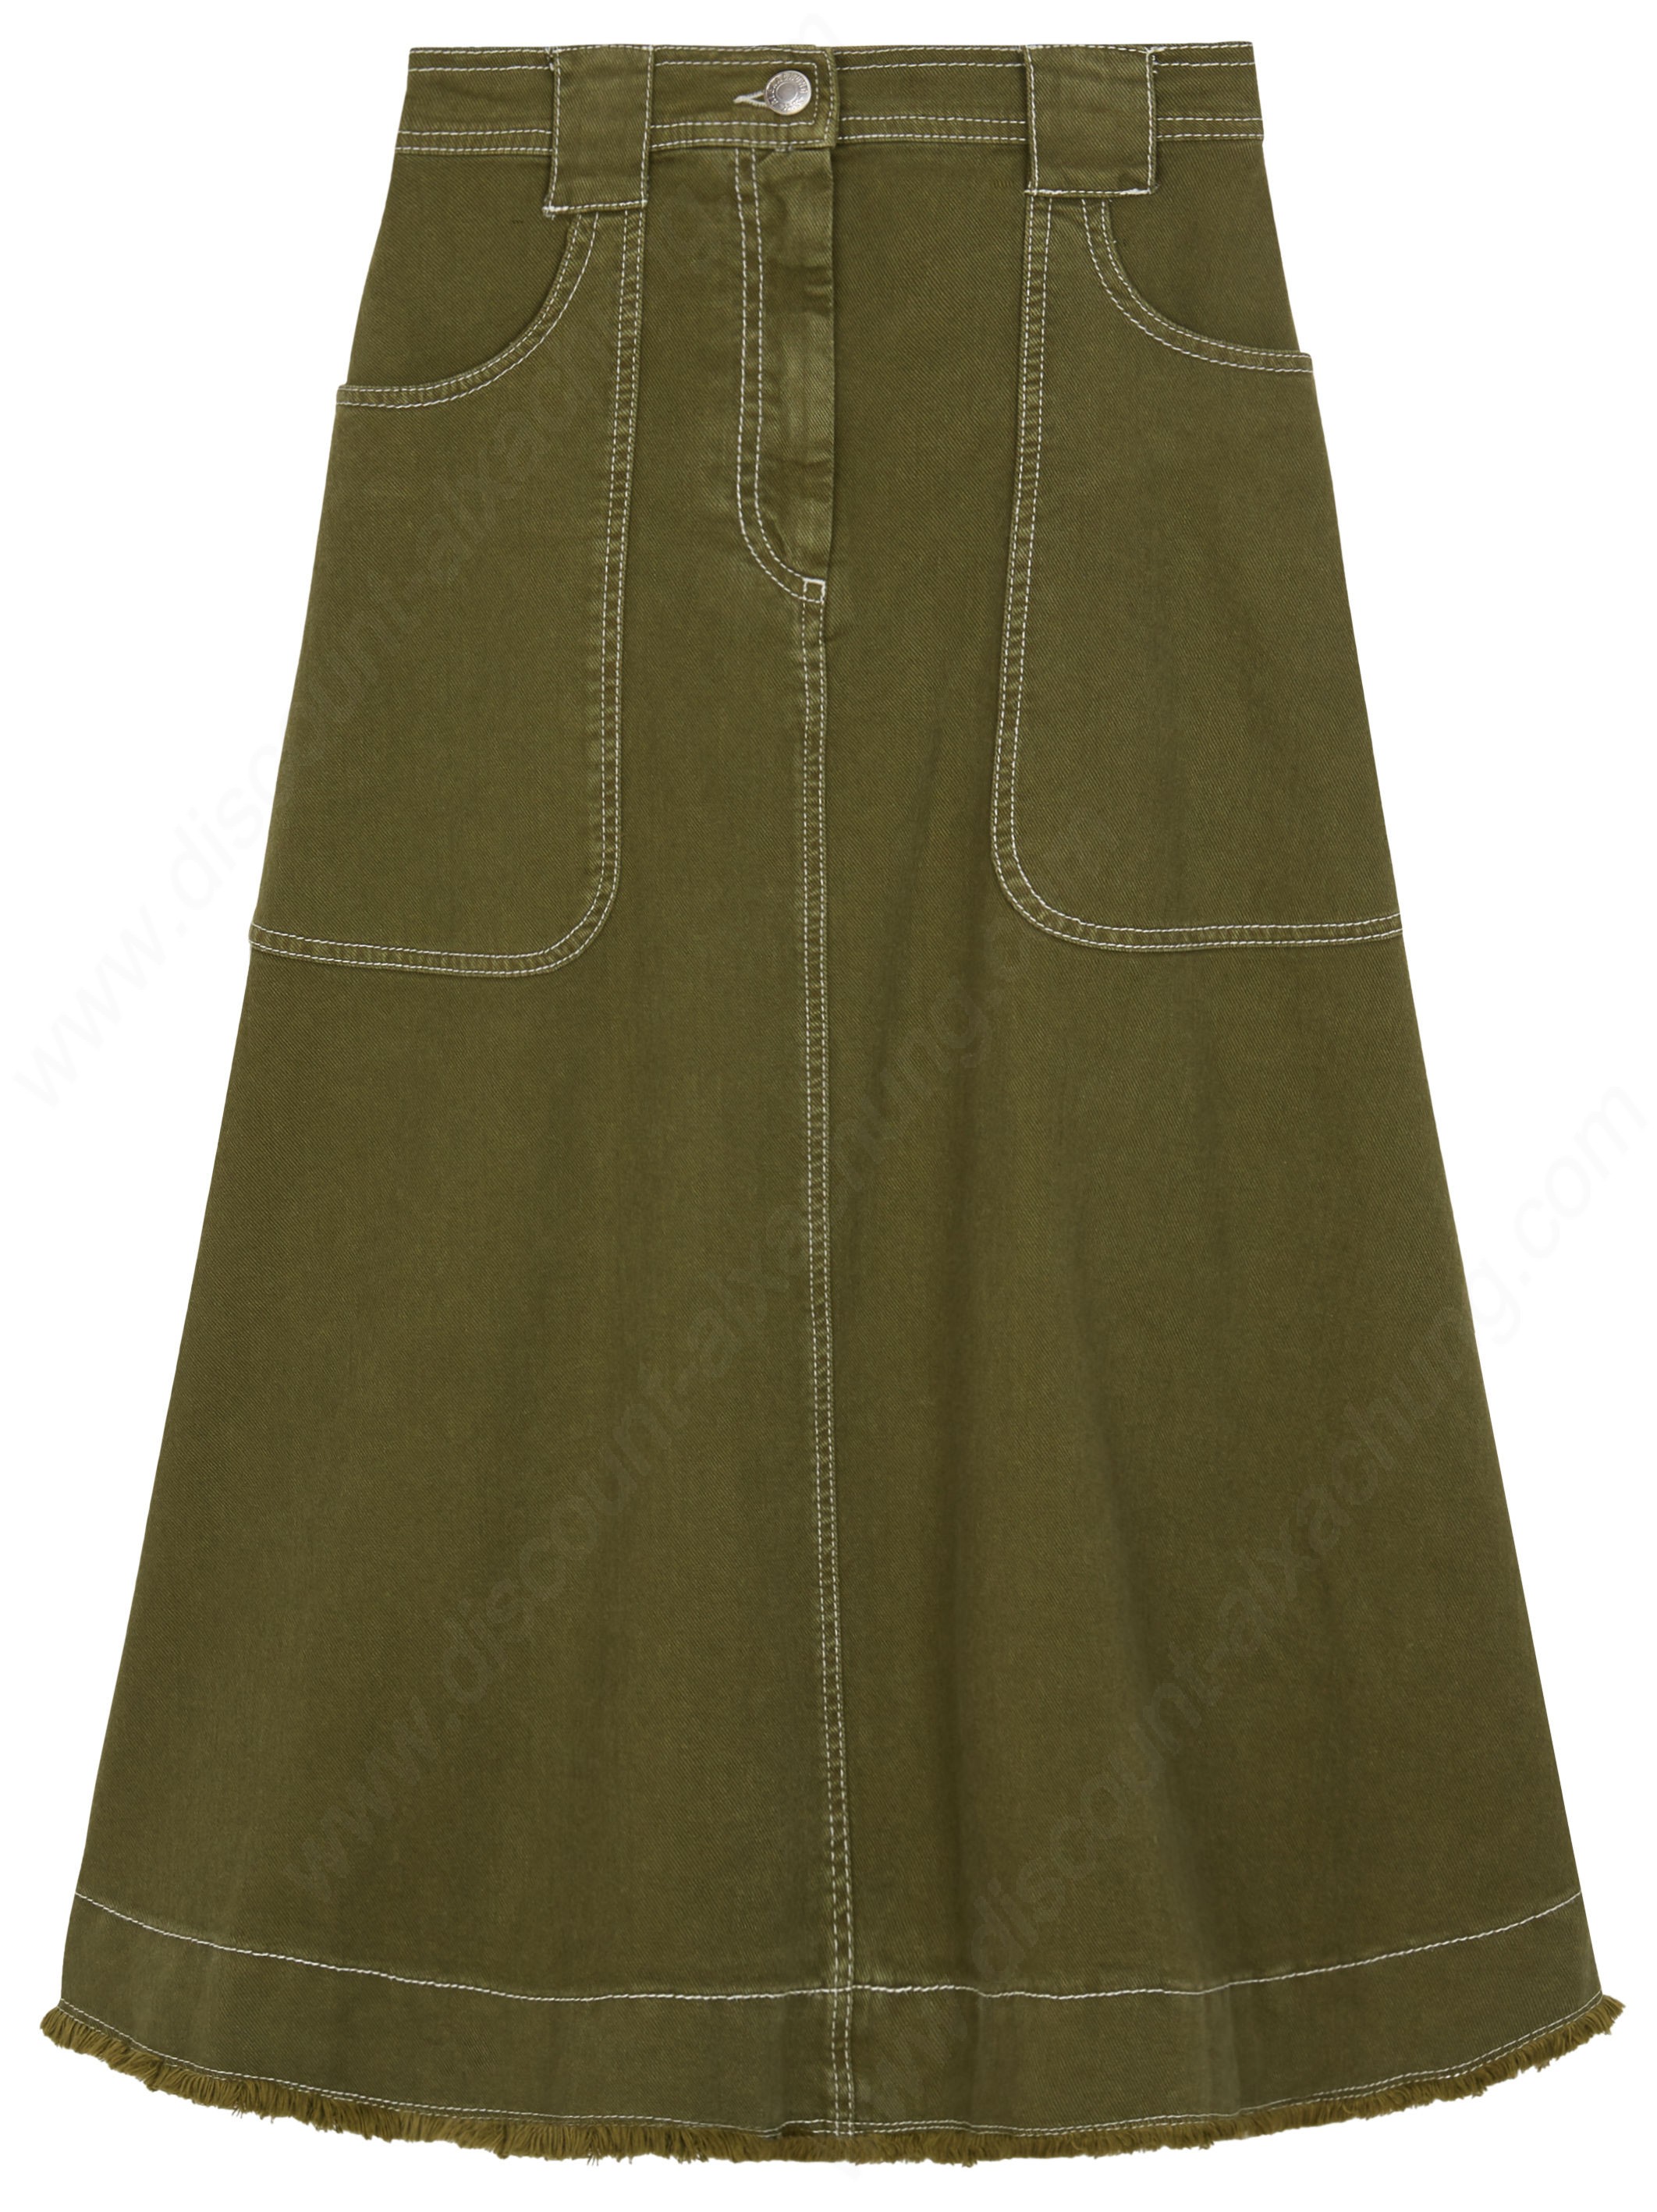 Alexachung Khaki Patch Pocket Skirt - Alexachung Khaki Patch Pocket Skirt